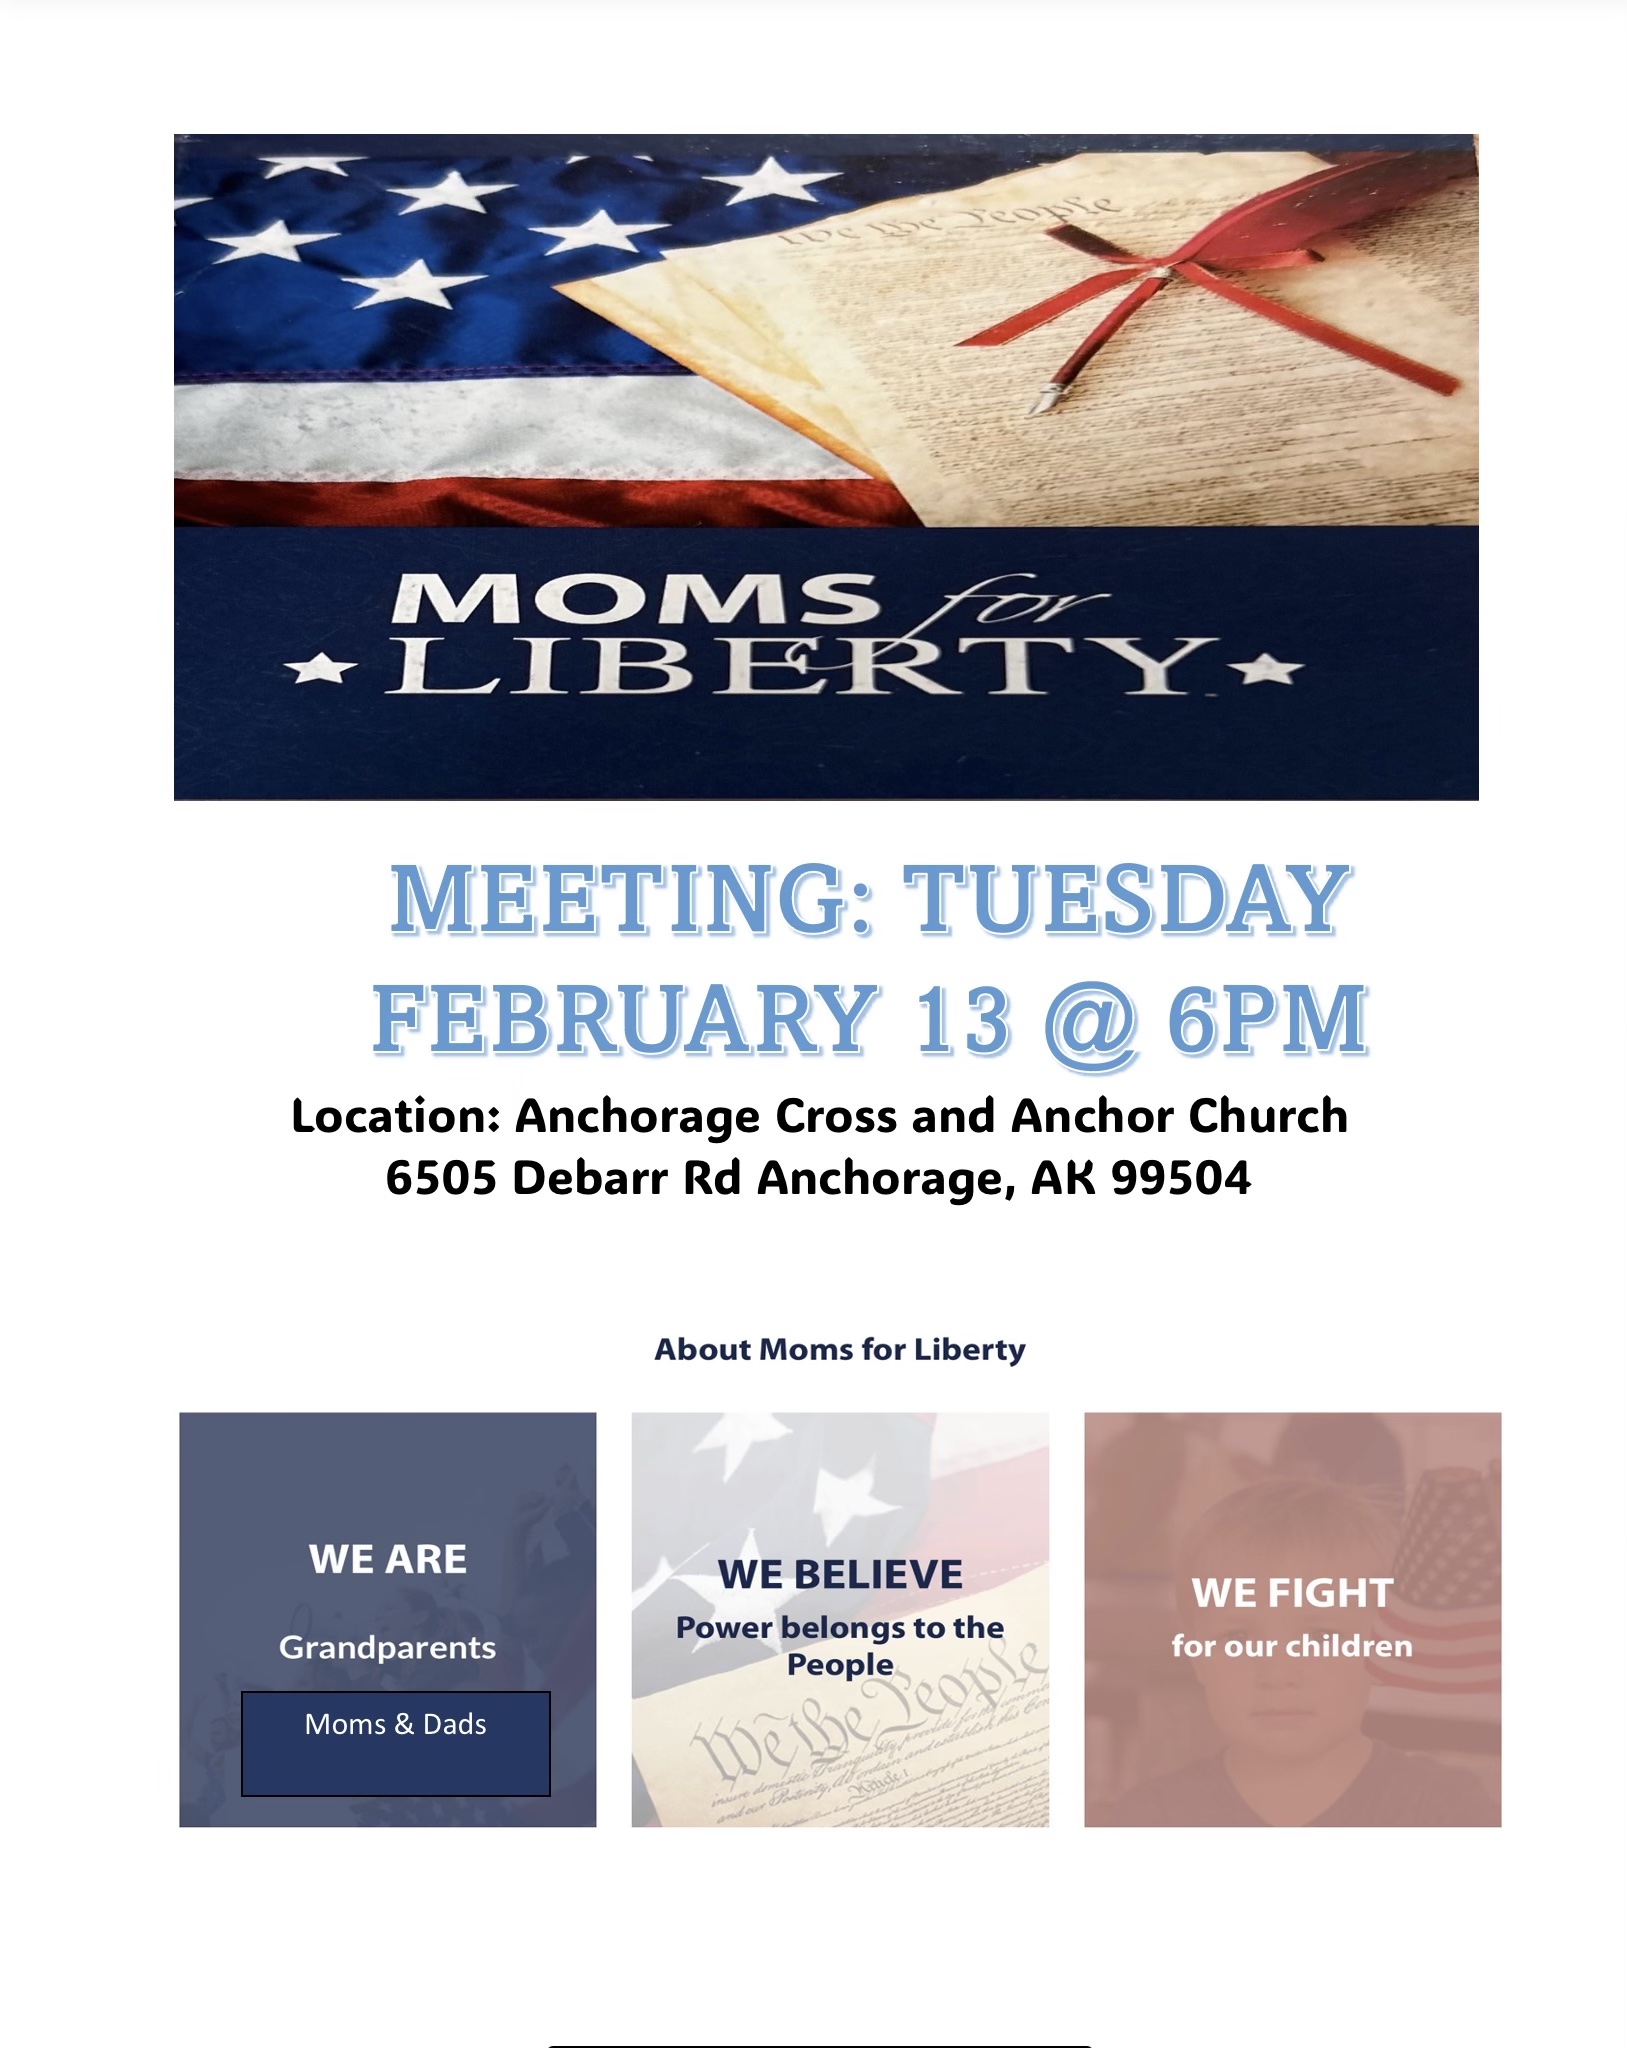 Meeting: Tuesday February 13 @ 6PM